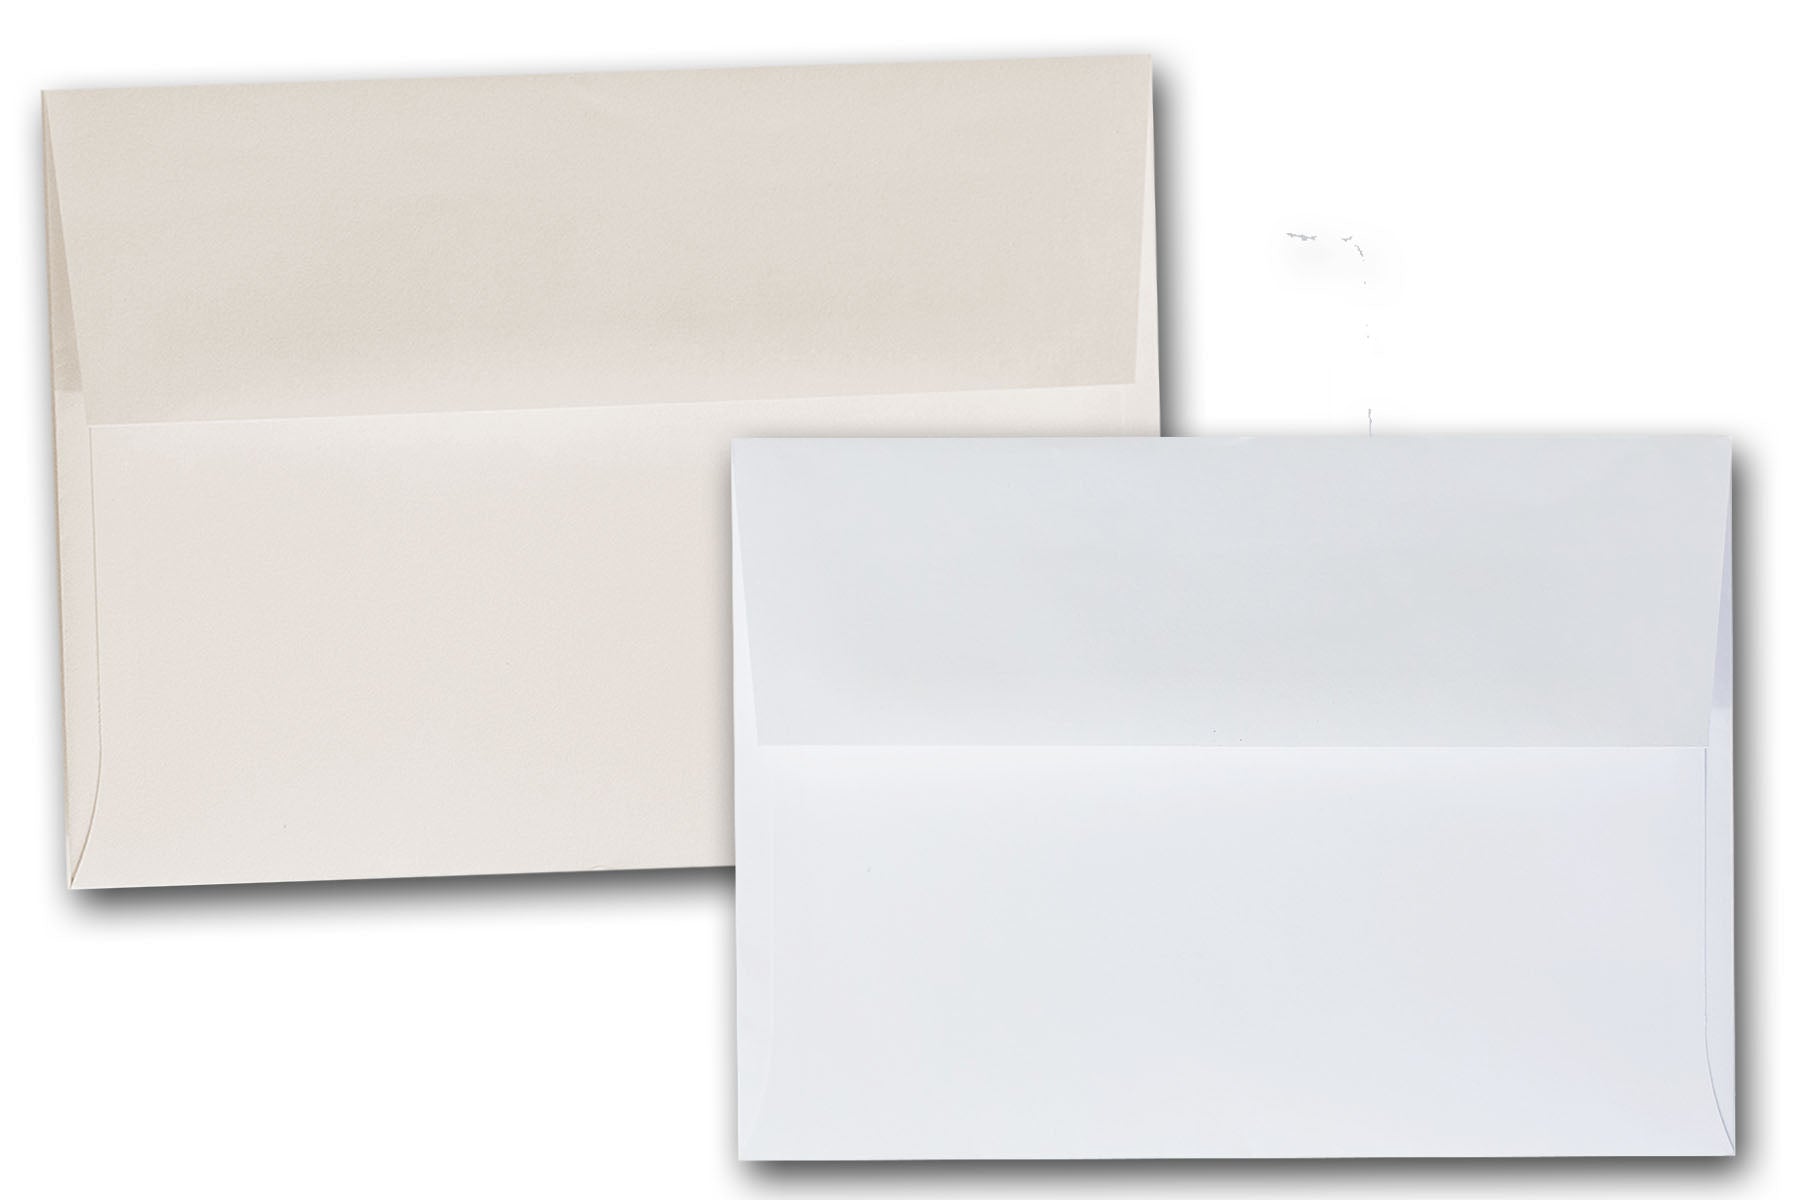 60 Thank You Gold Black White Blue Designed Envelopes Notes Cards Bulk Set  4x6